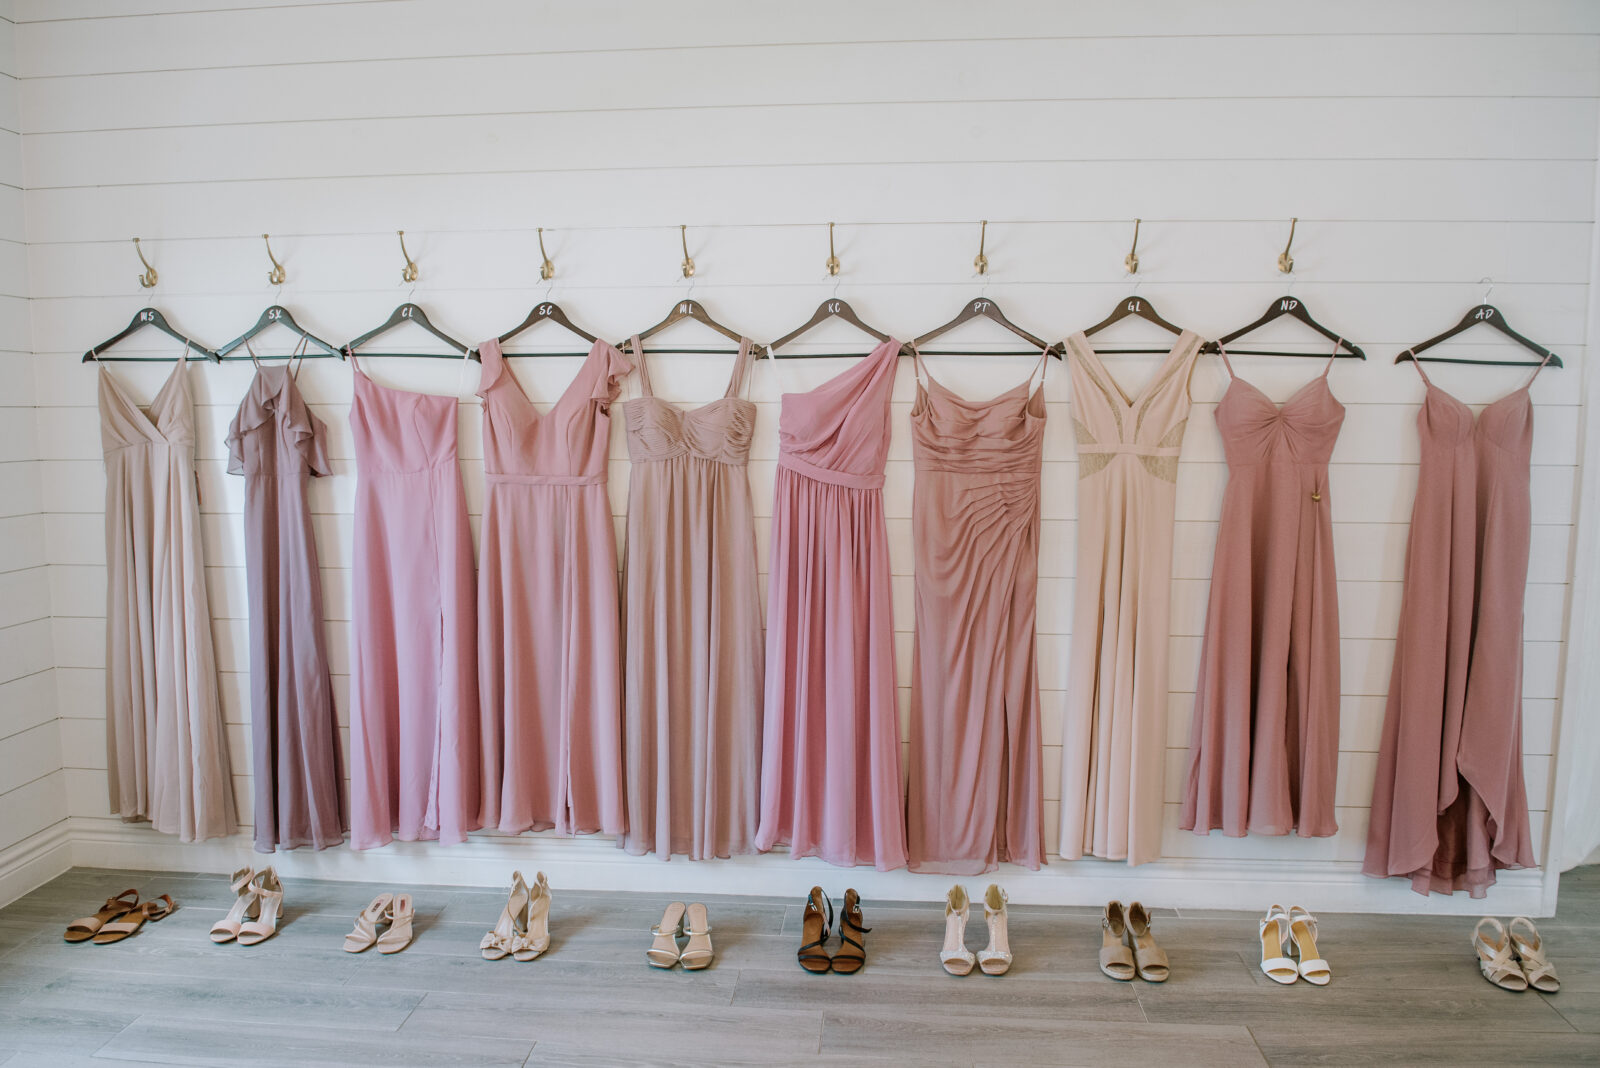 Bridemaids Dresses in various shades of Pink & Mauve at Houston Wedding Venue Boxwood Manor by houston photographer Mercie B Studio